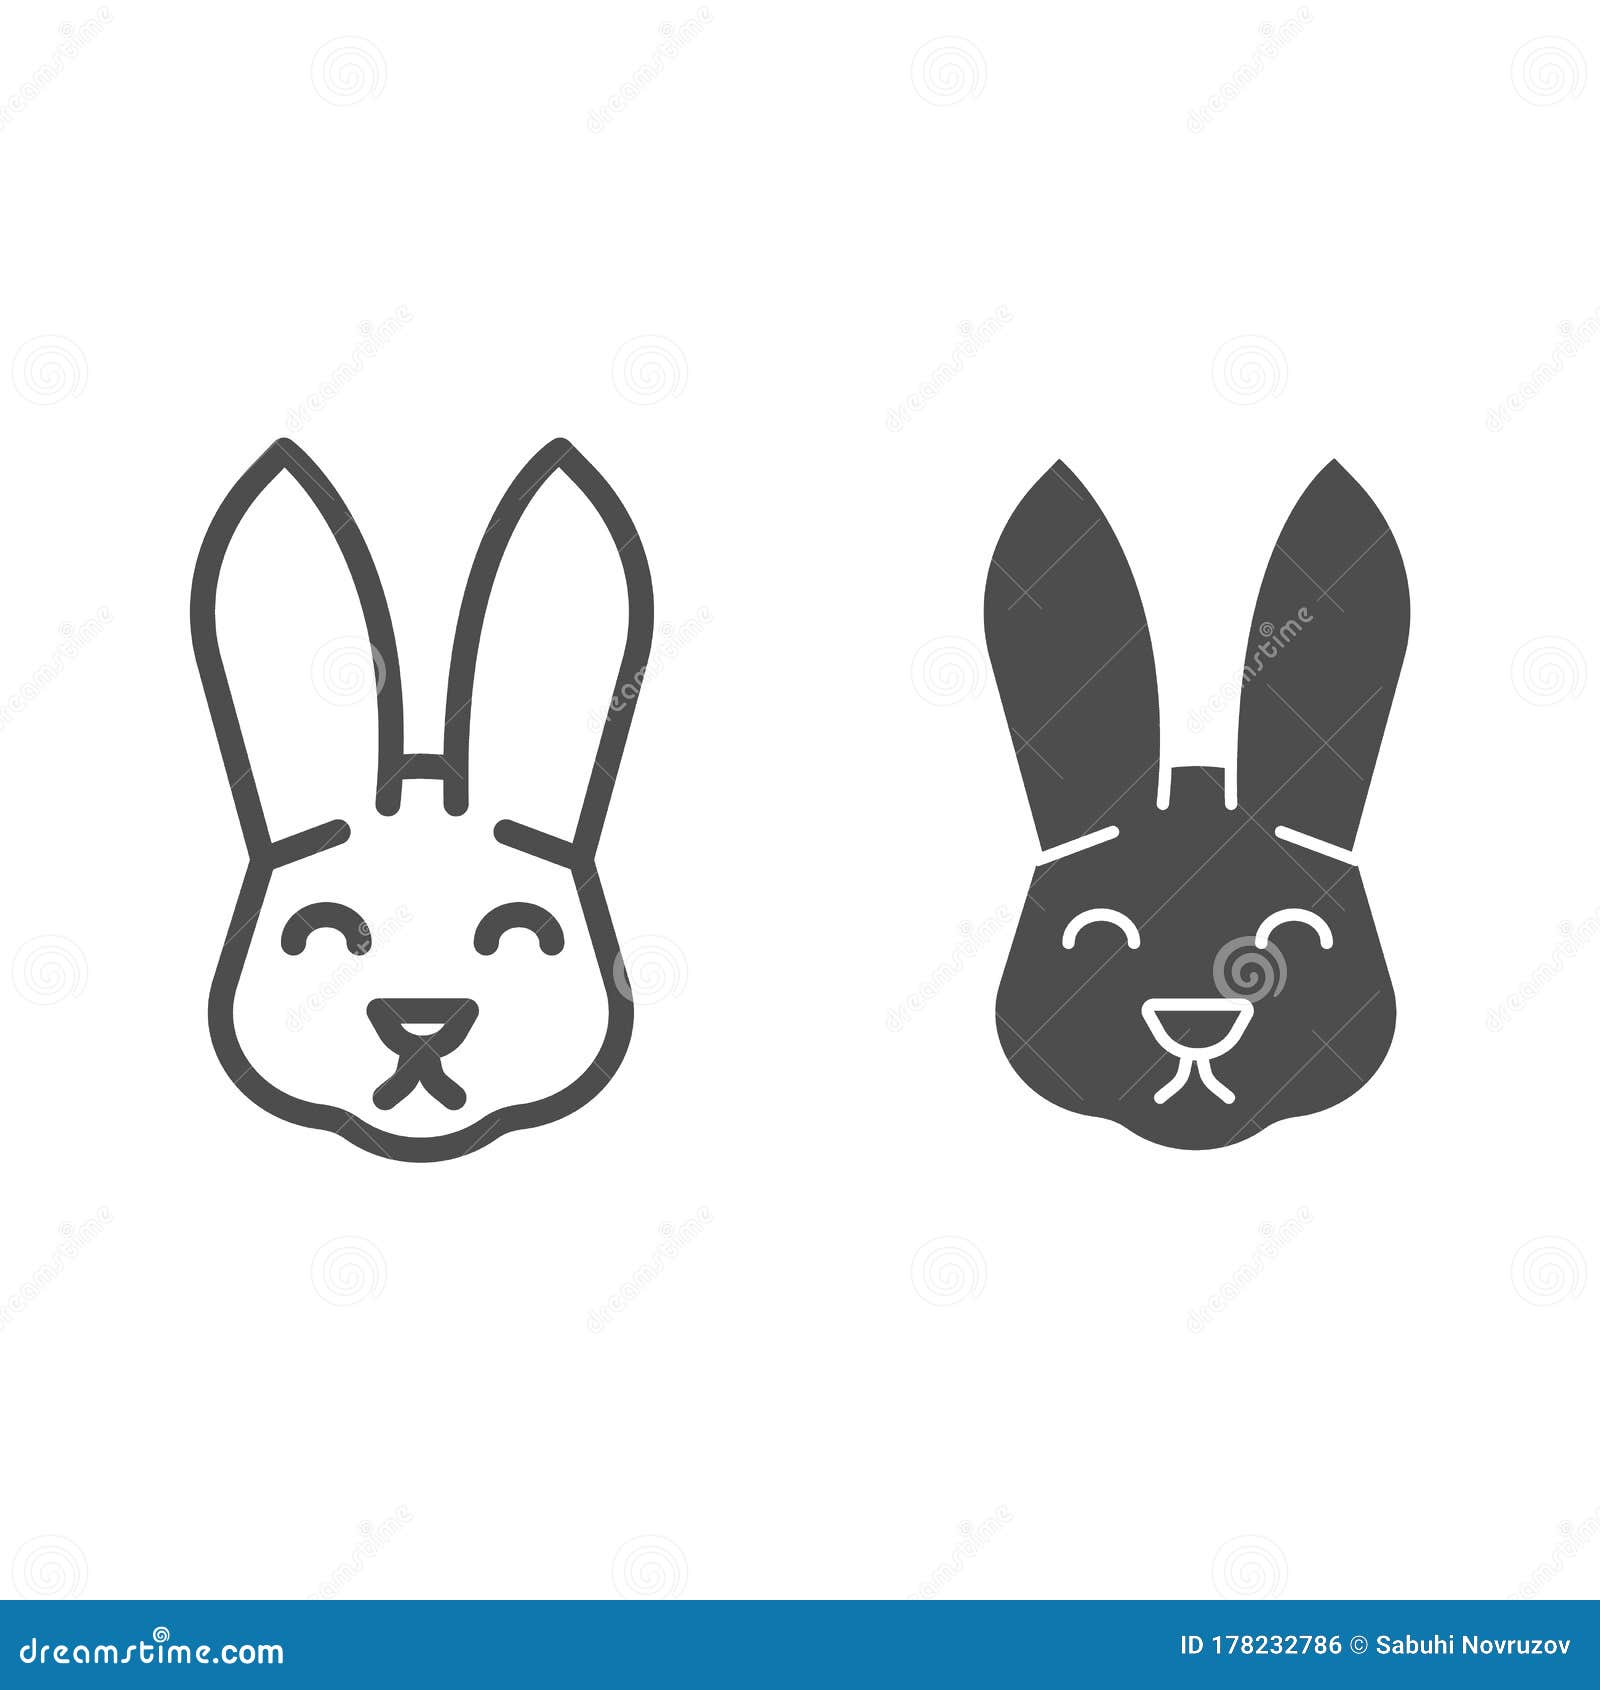 Bunny Head Outline Svg - 195+ SVG PNG EPS DXF in Zip File